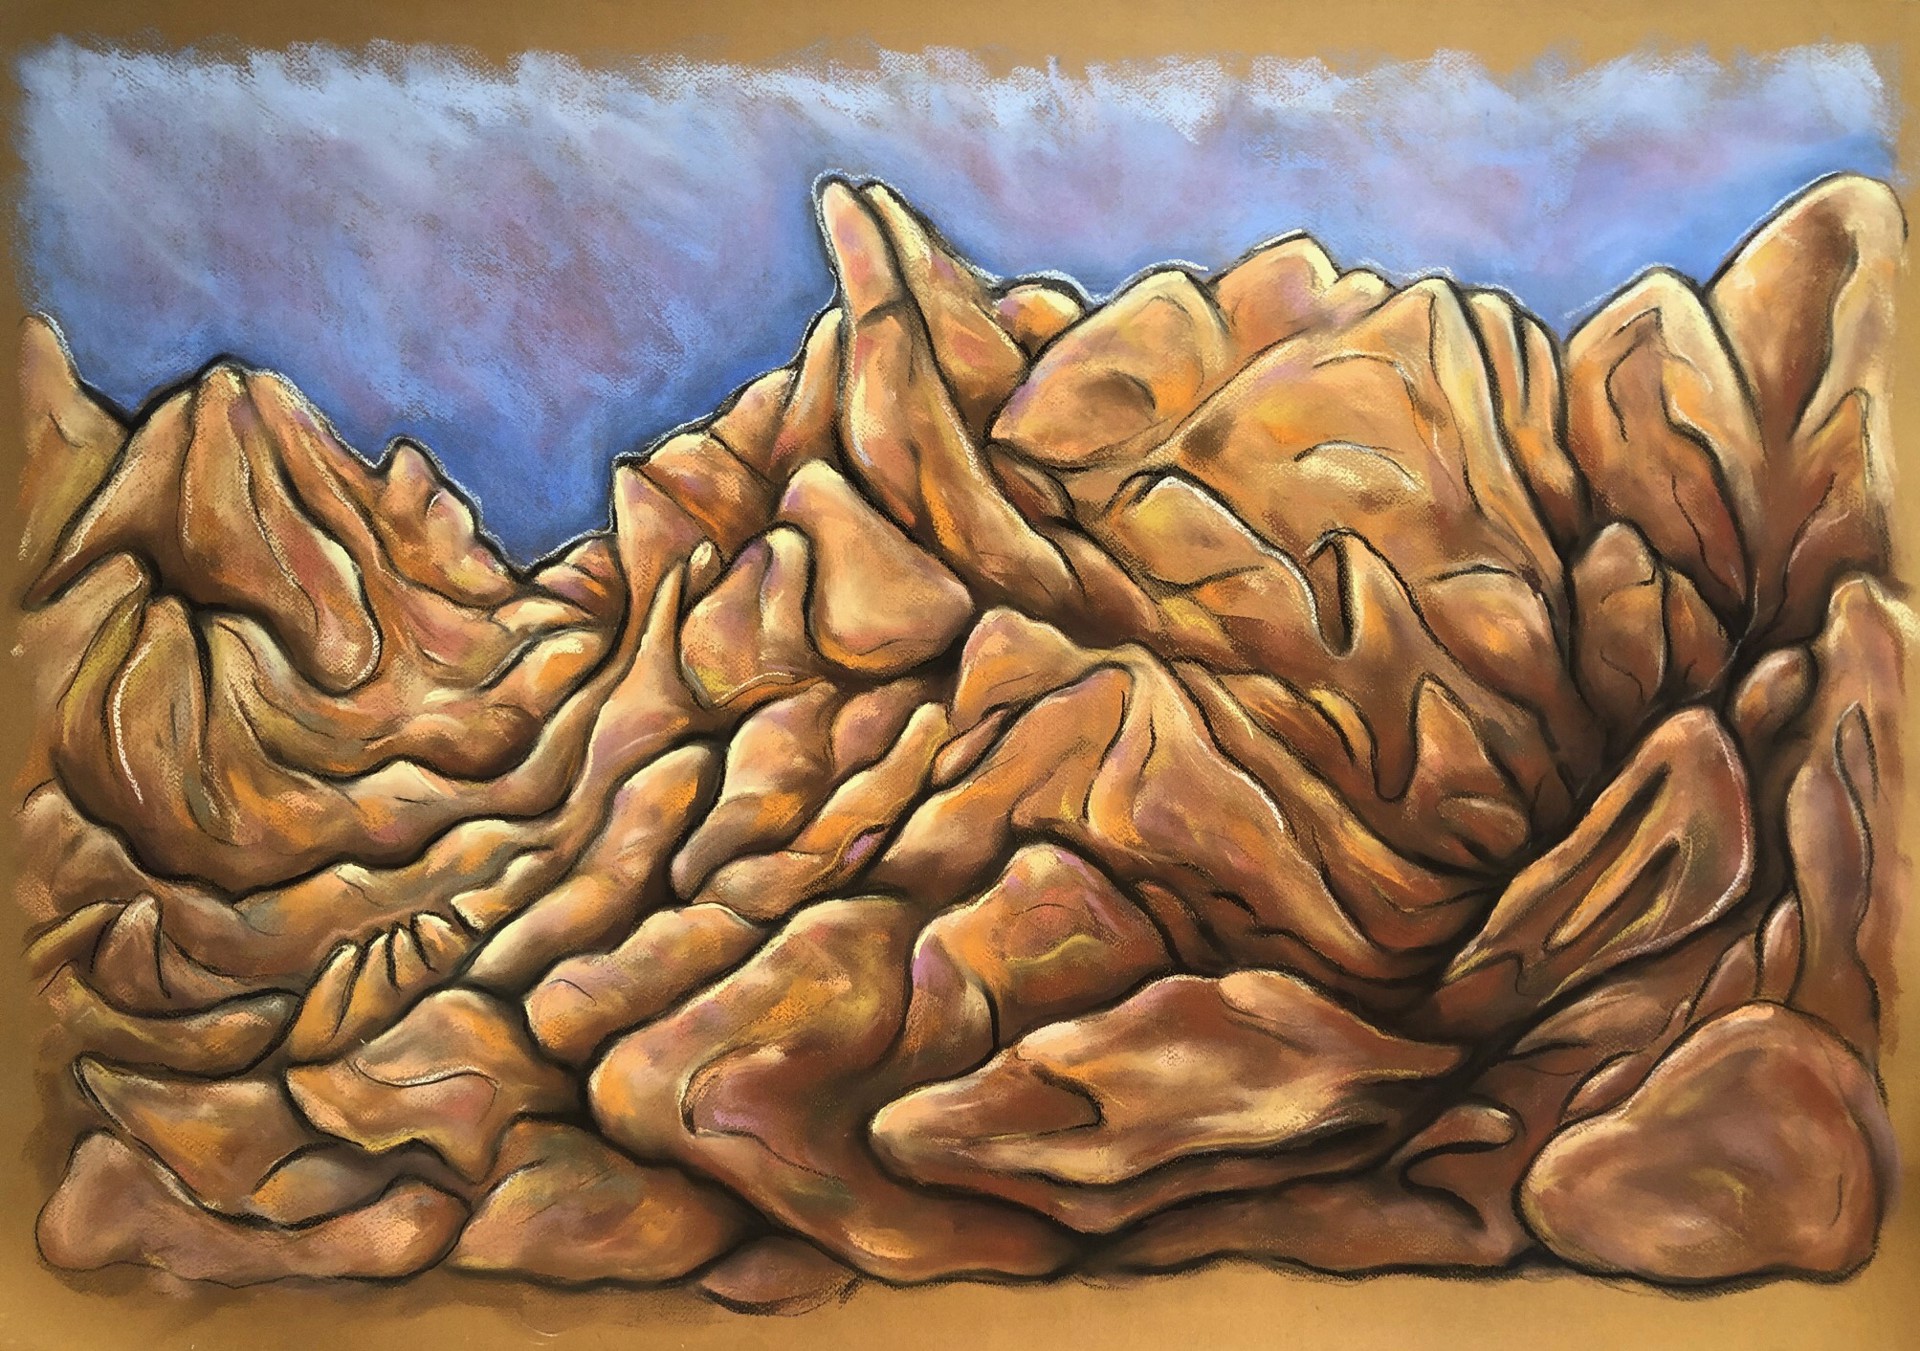 Joshua Tree Rocks (Abstract) by Steven Lustig